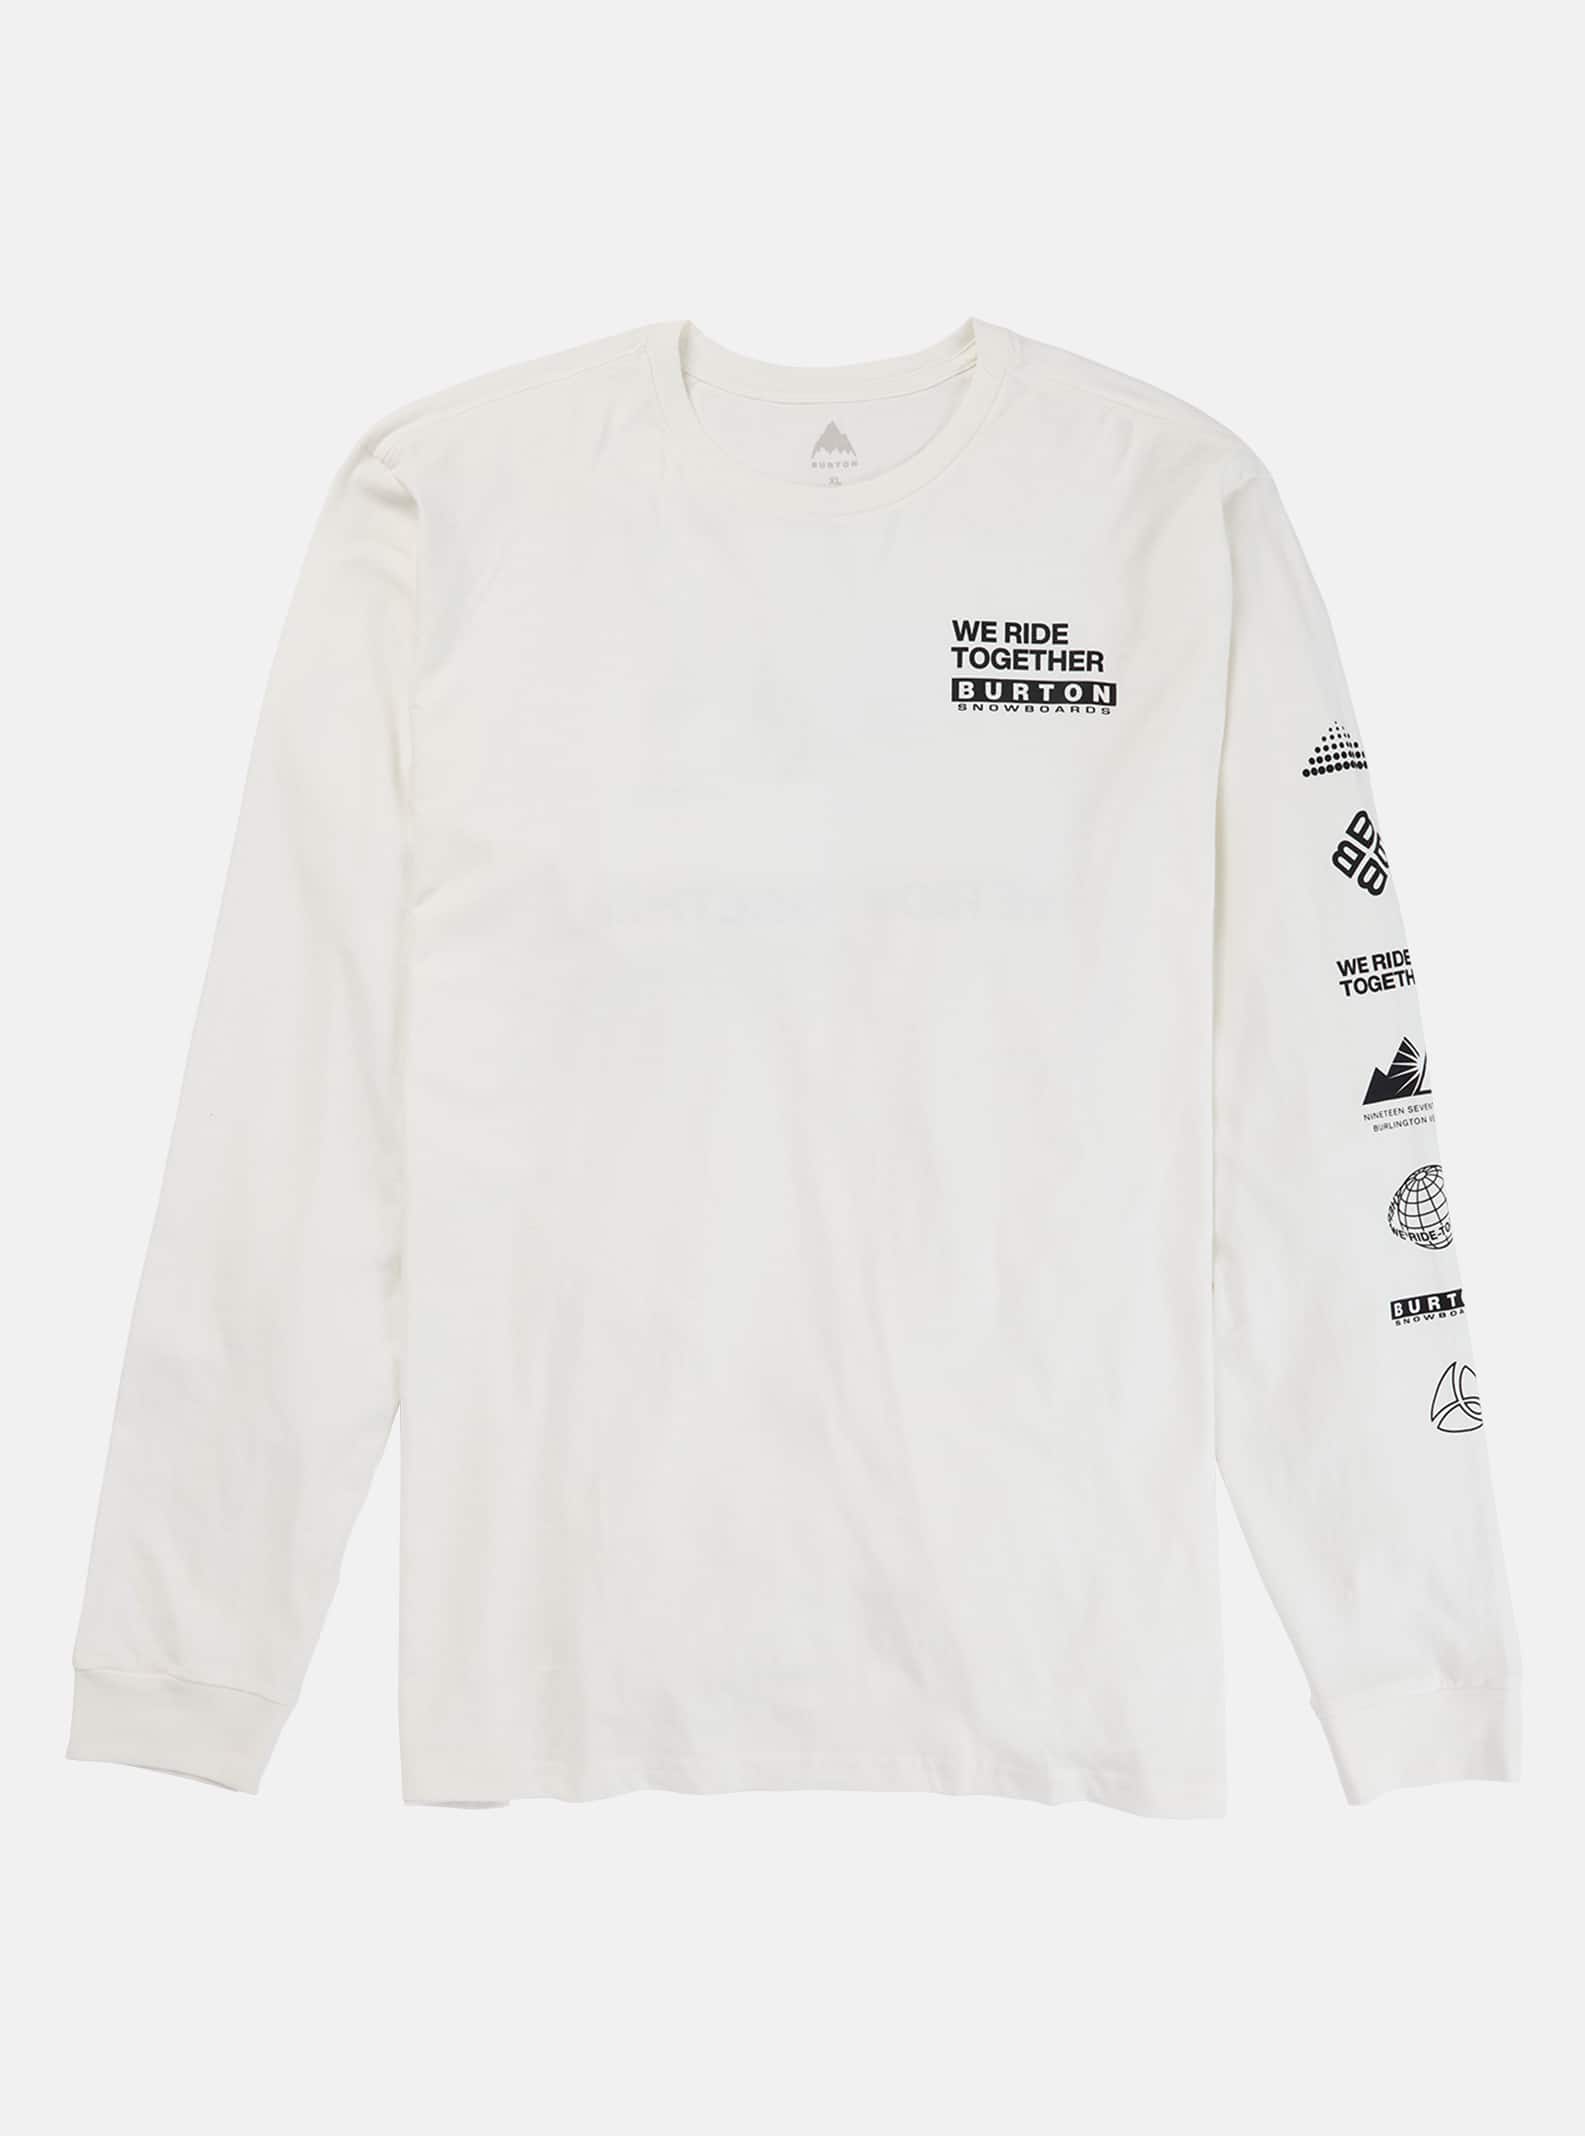 HERREN Hemden & T-Shirts Casual Burton T-Shirt Weiß/Grau L Rabatt 81 % 